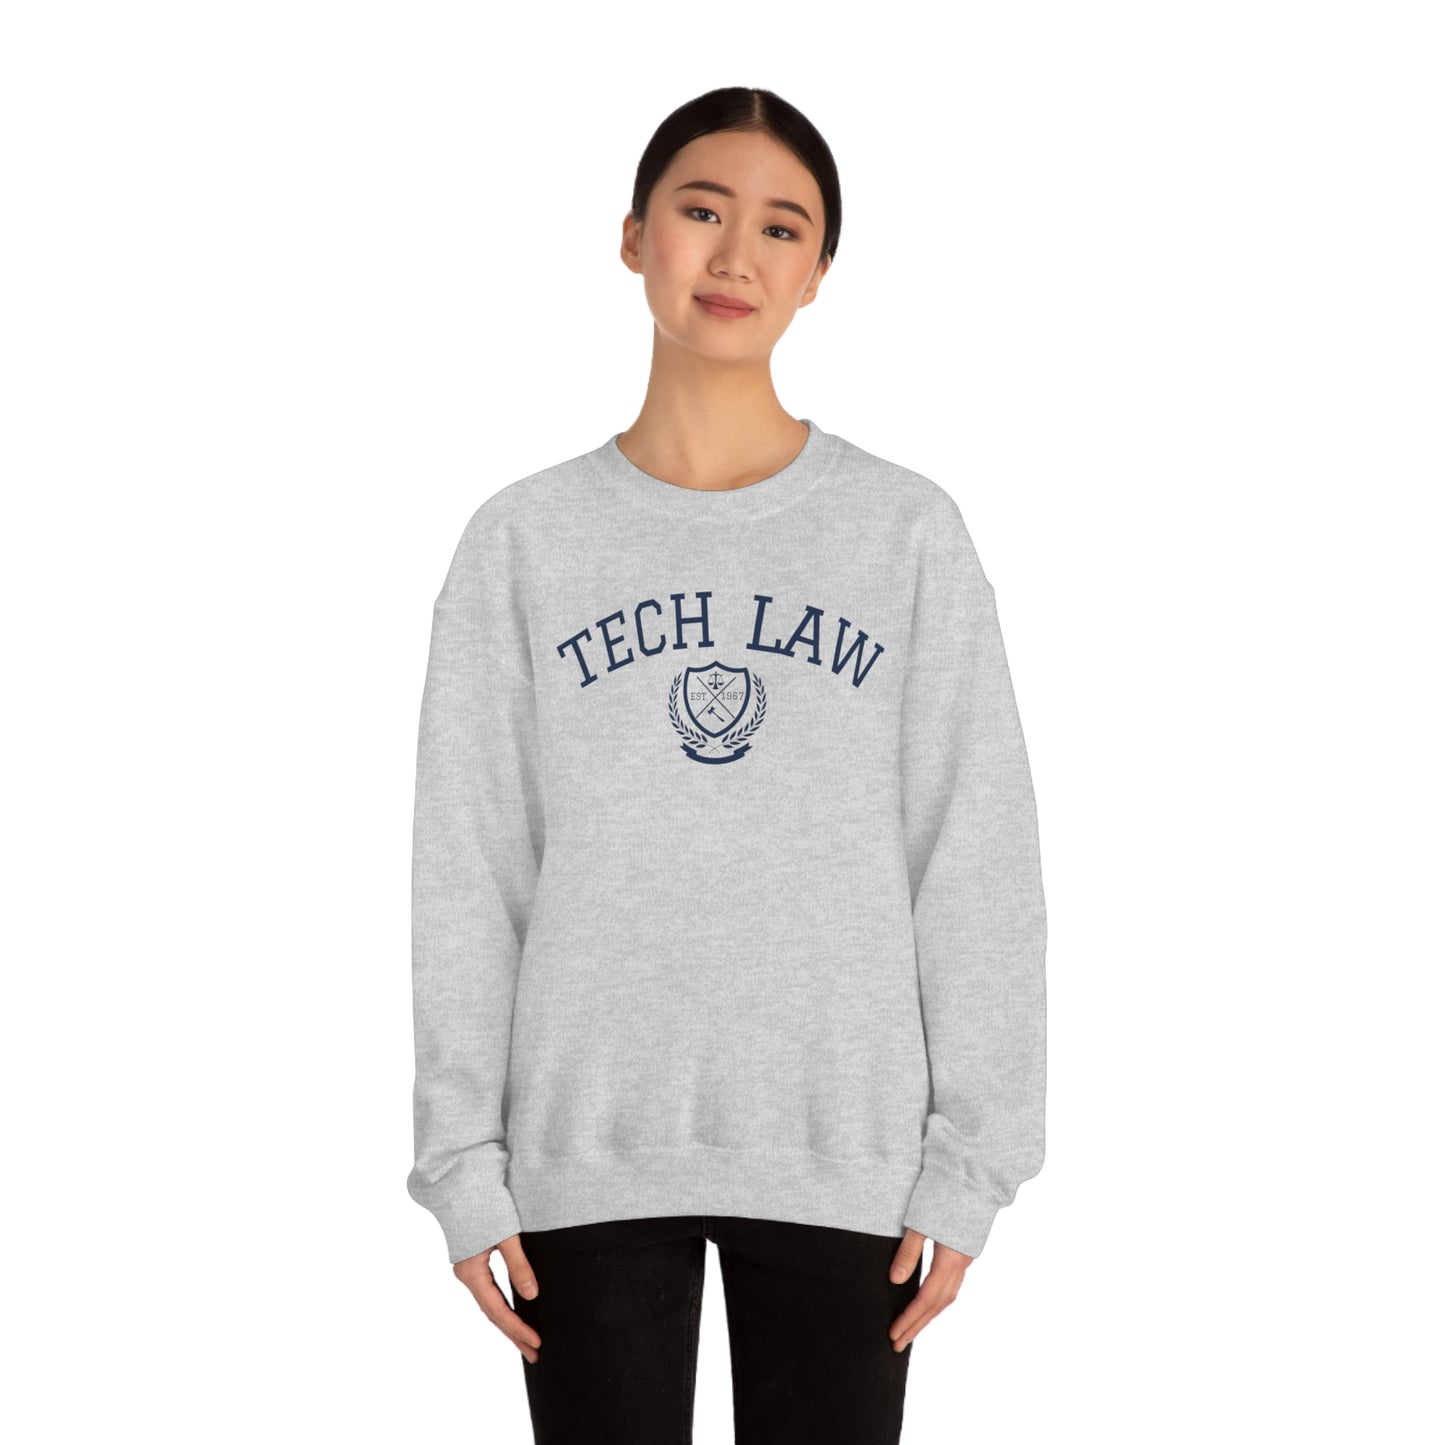 Tech Law Unisex Heavy Blend Crewneck Sweatshirt